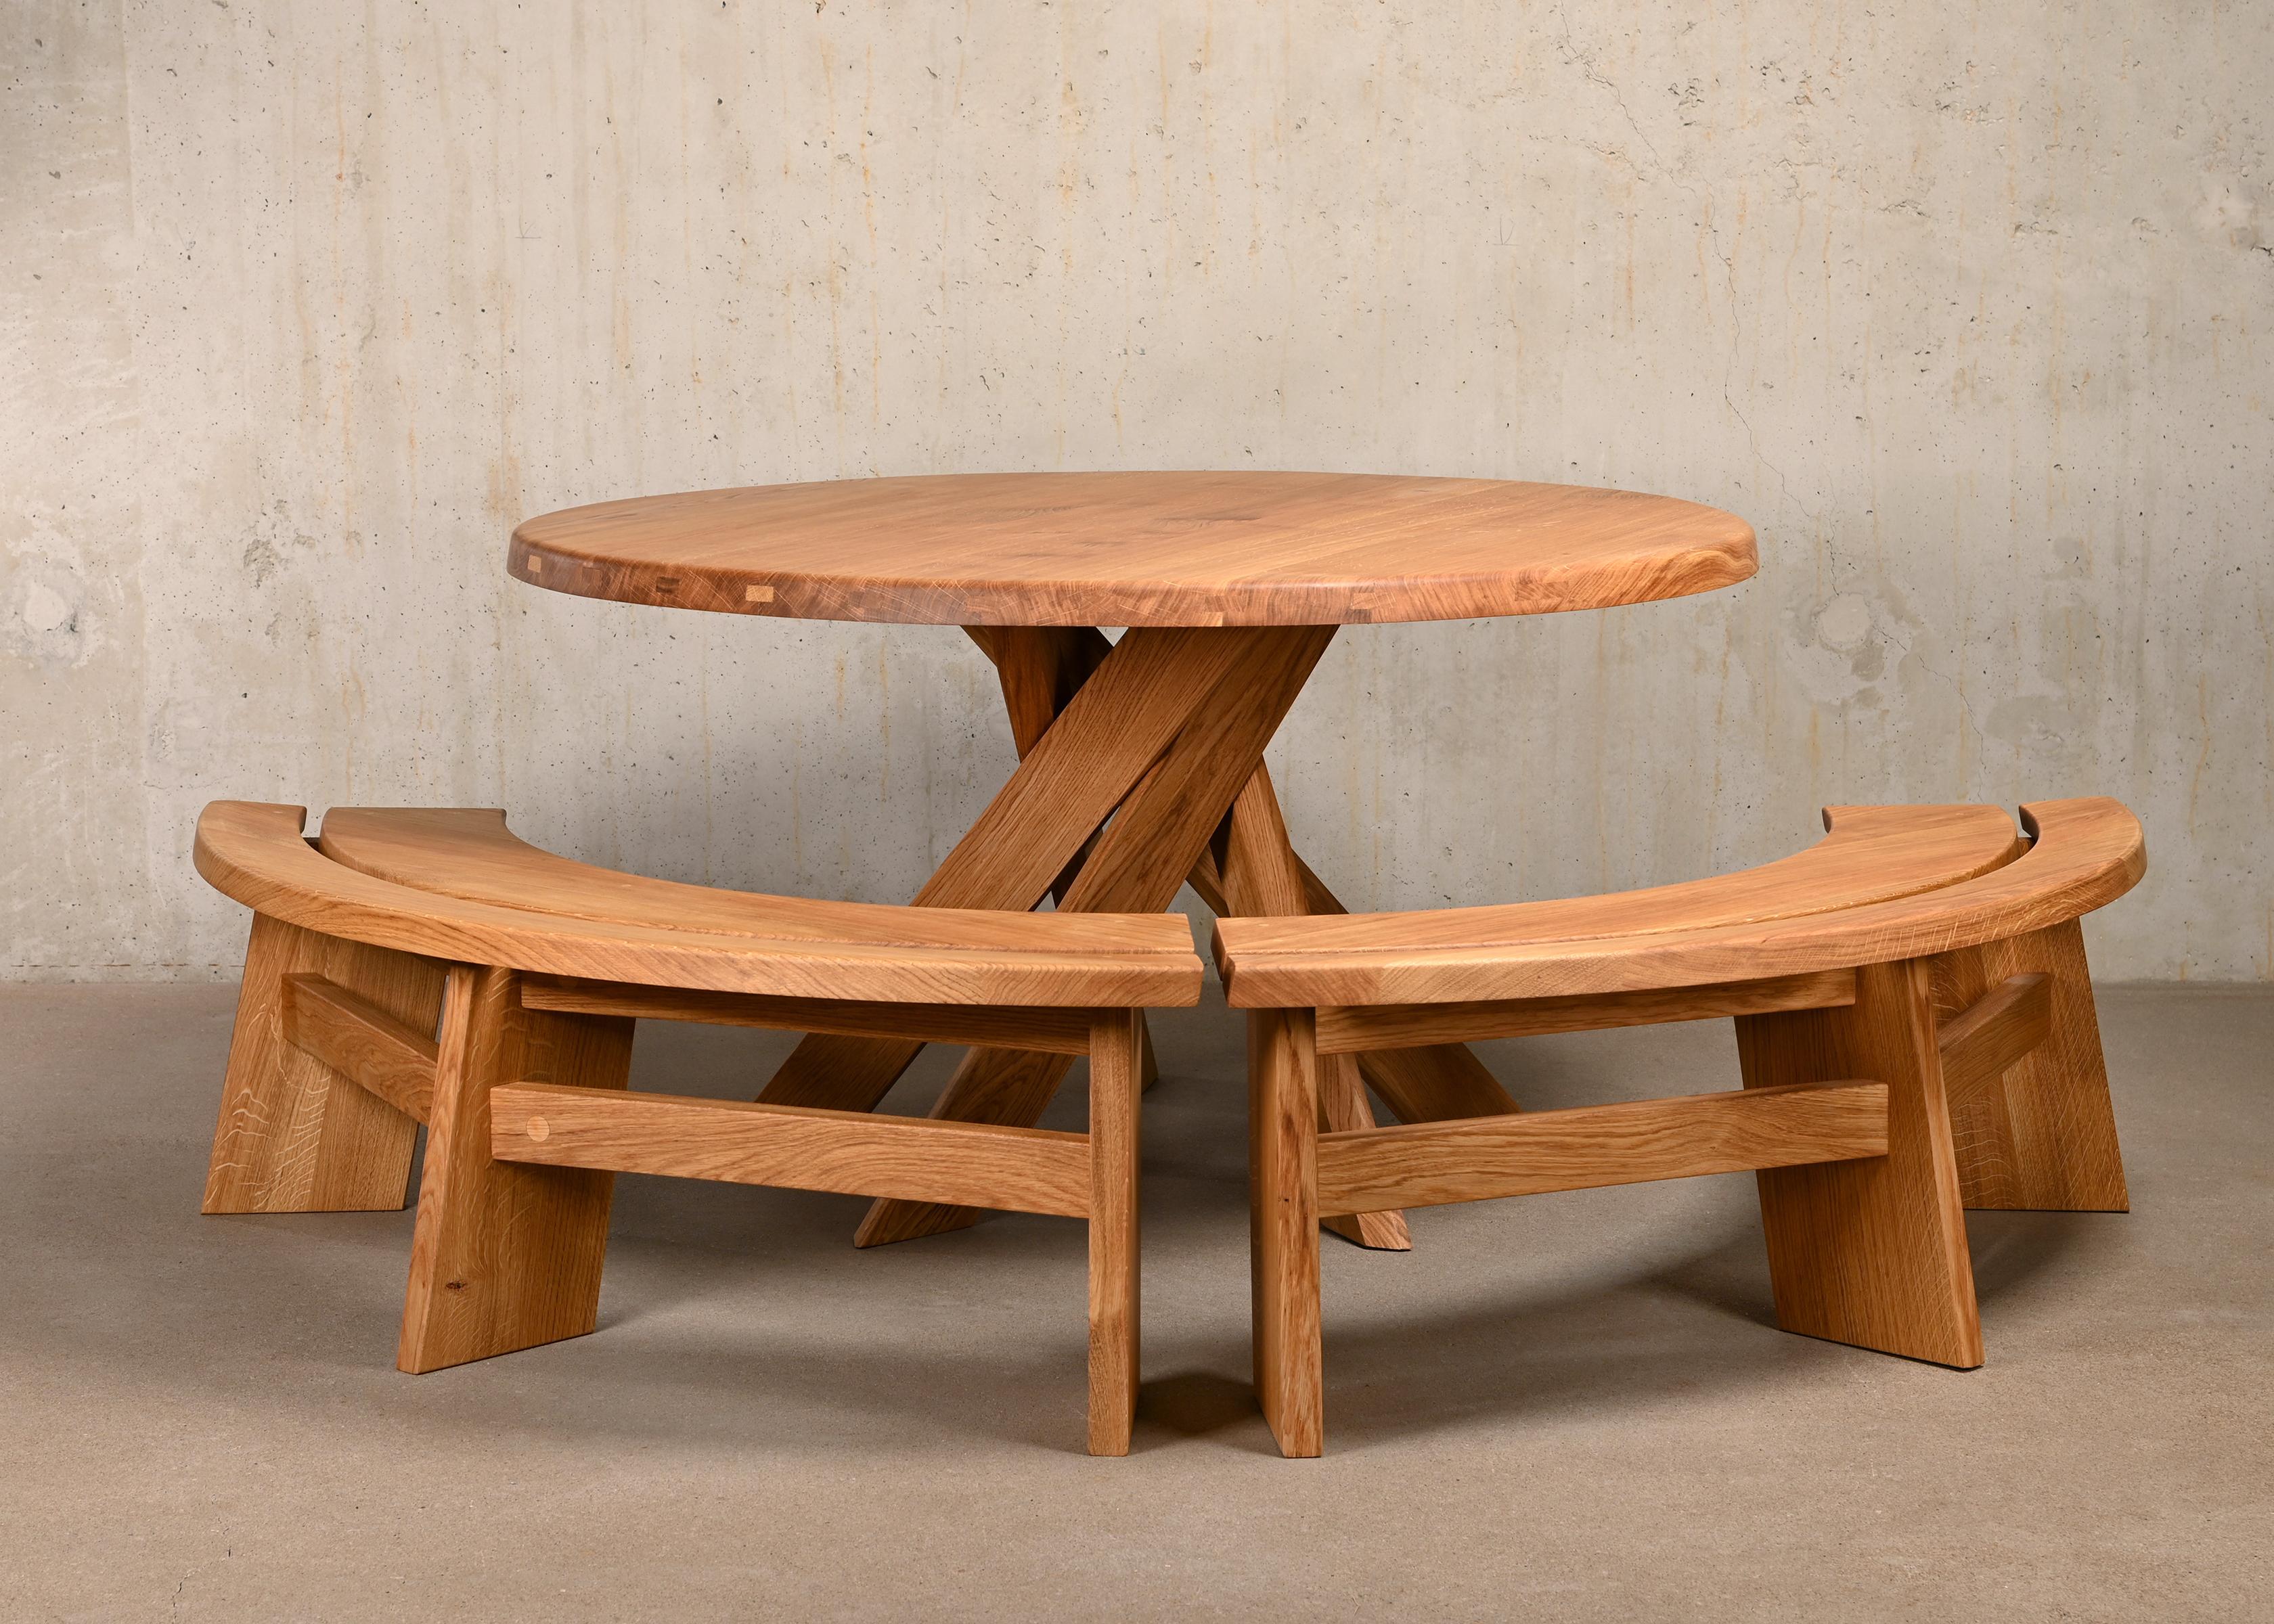 Pierre Chapo Solid Oak T21 'Model D' Table by Chapo Creation, France 1